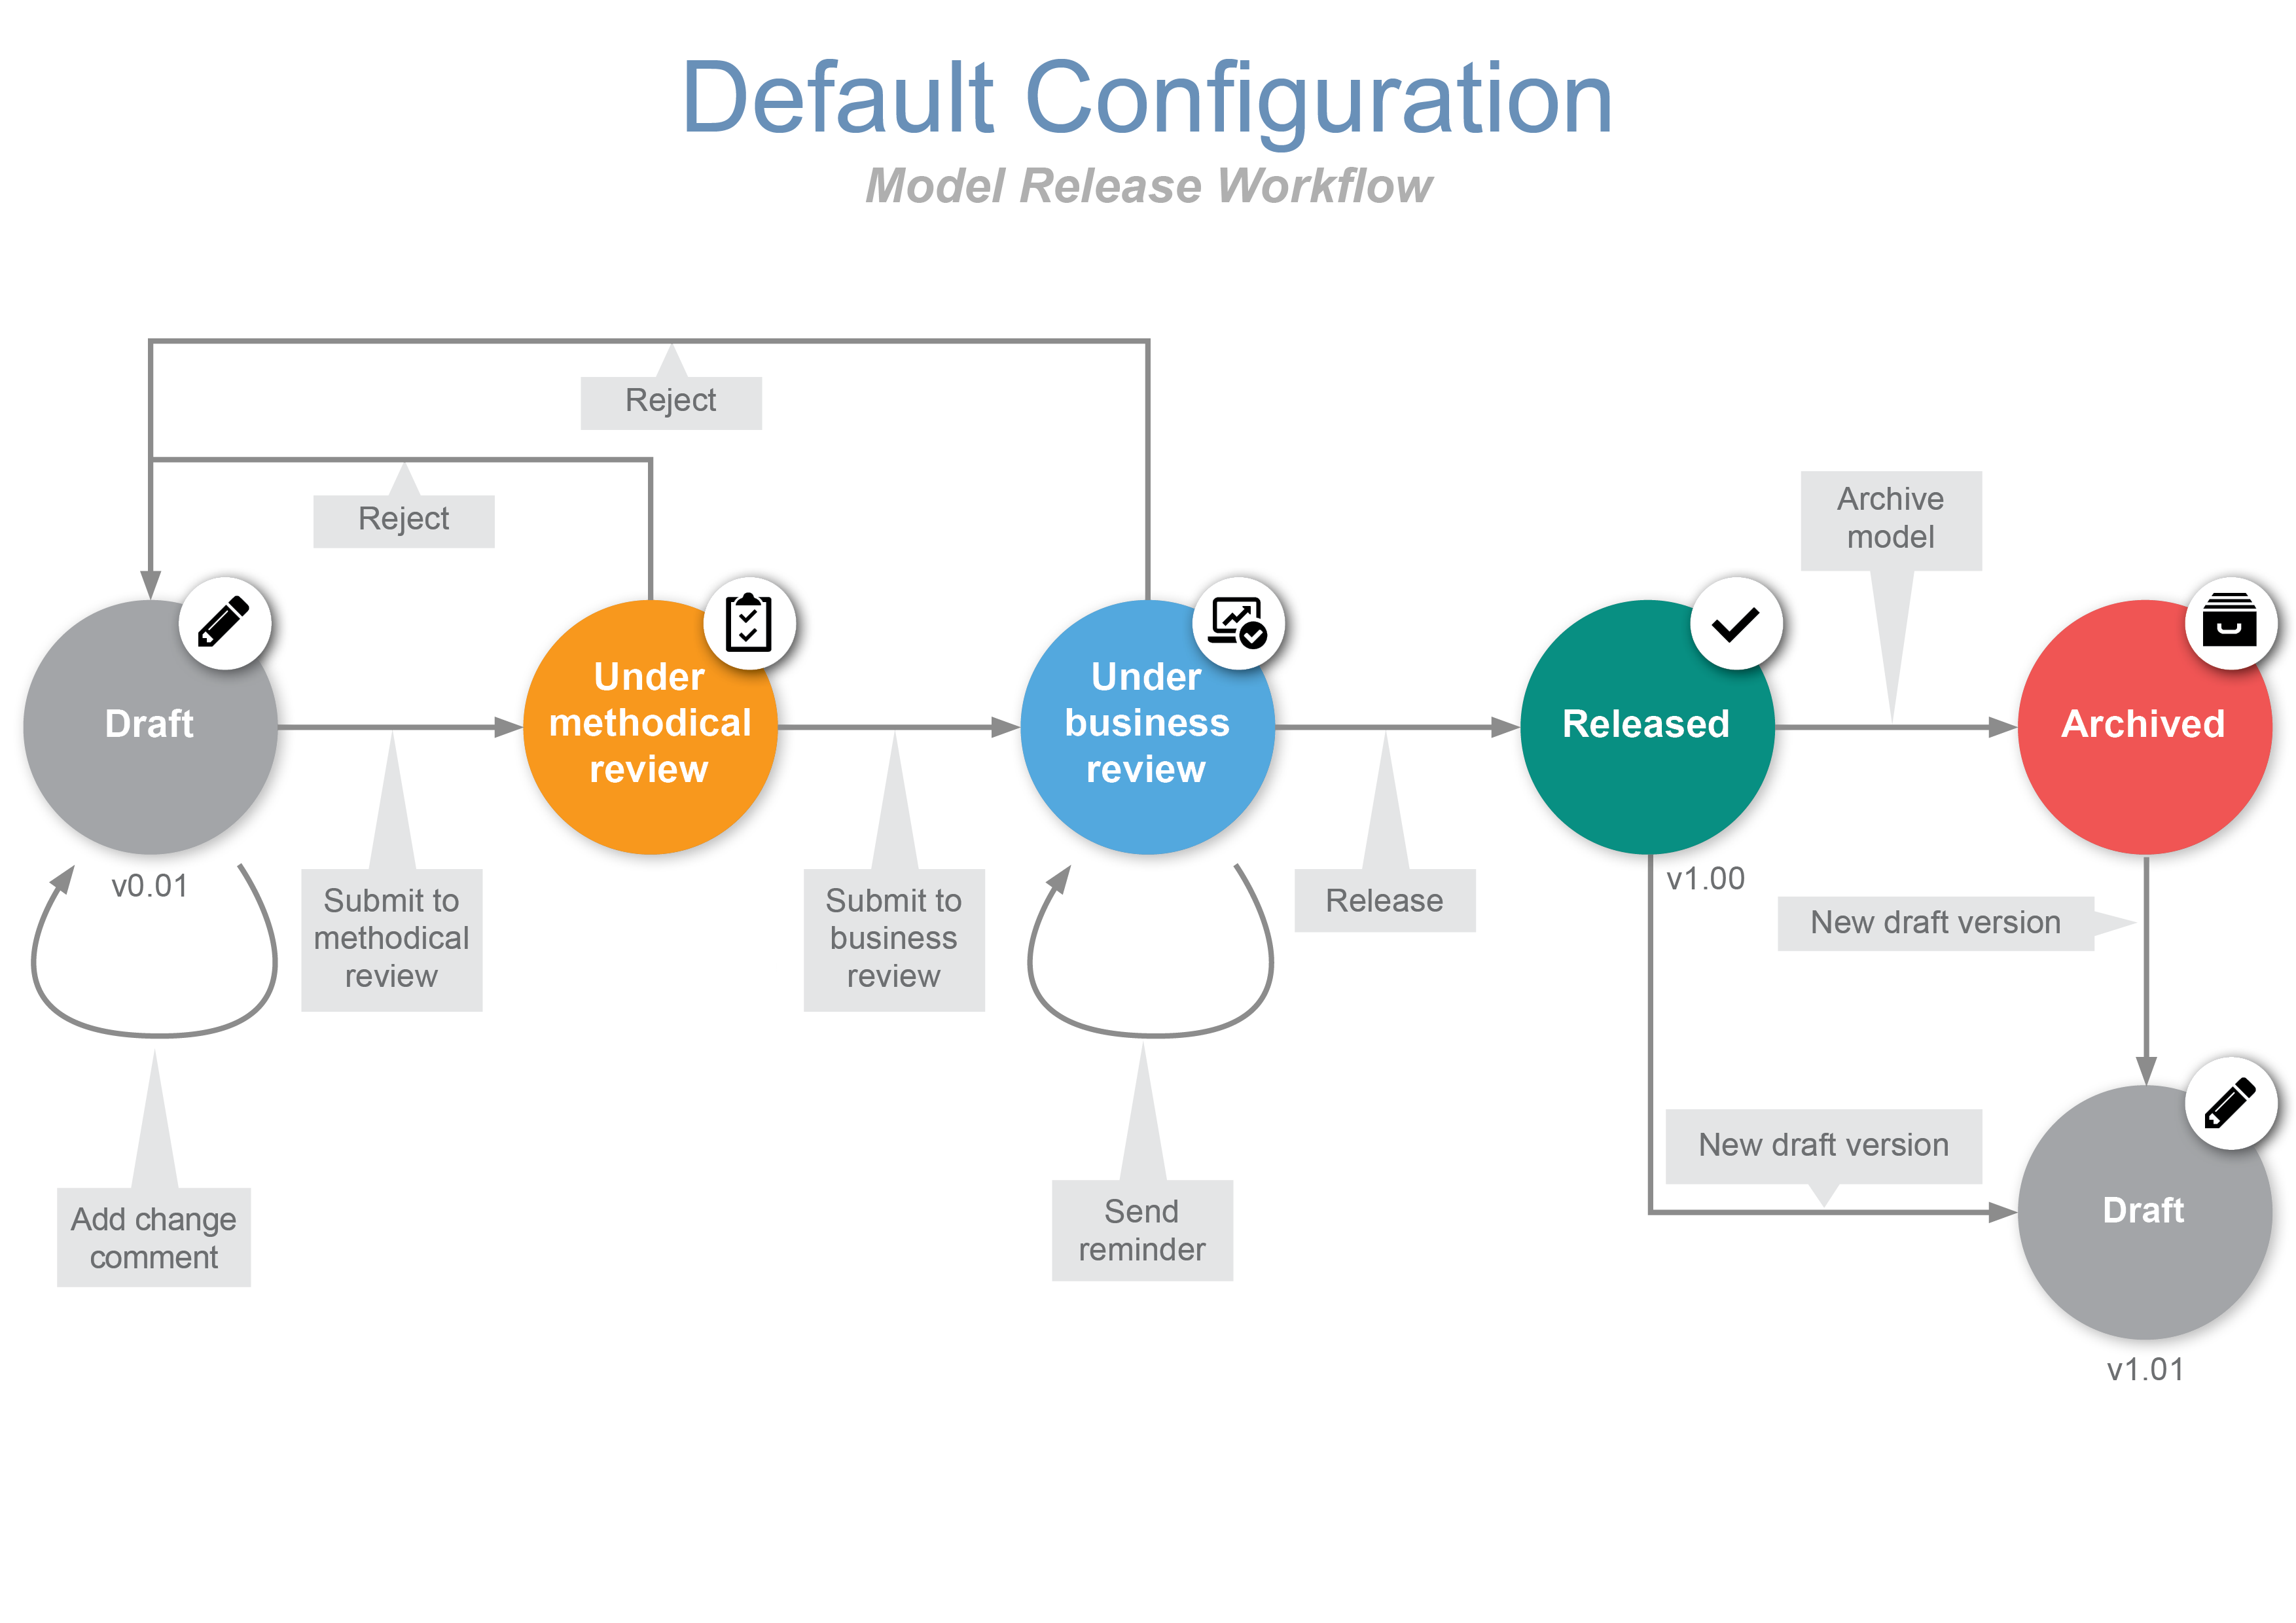  Model Release Workflow (Standard Configuration)